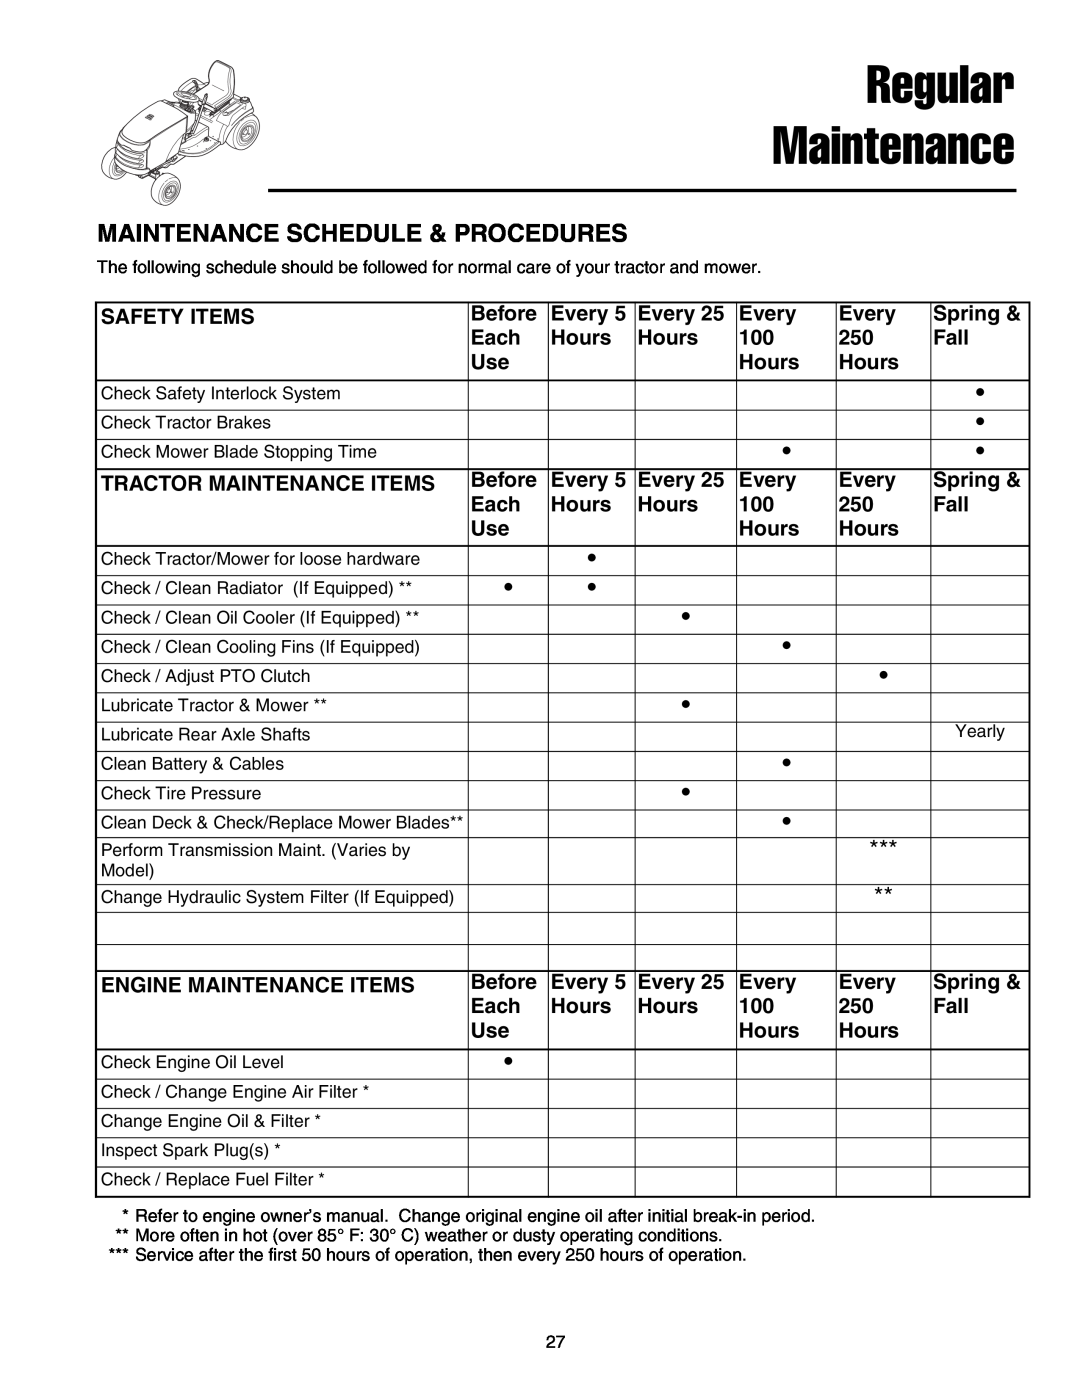 Snapper 1700, 2700, 400 manual Regular Maintenance, Maintenance Schedule & Procedures 